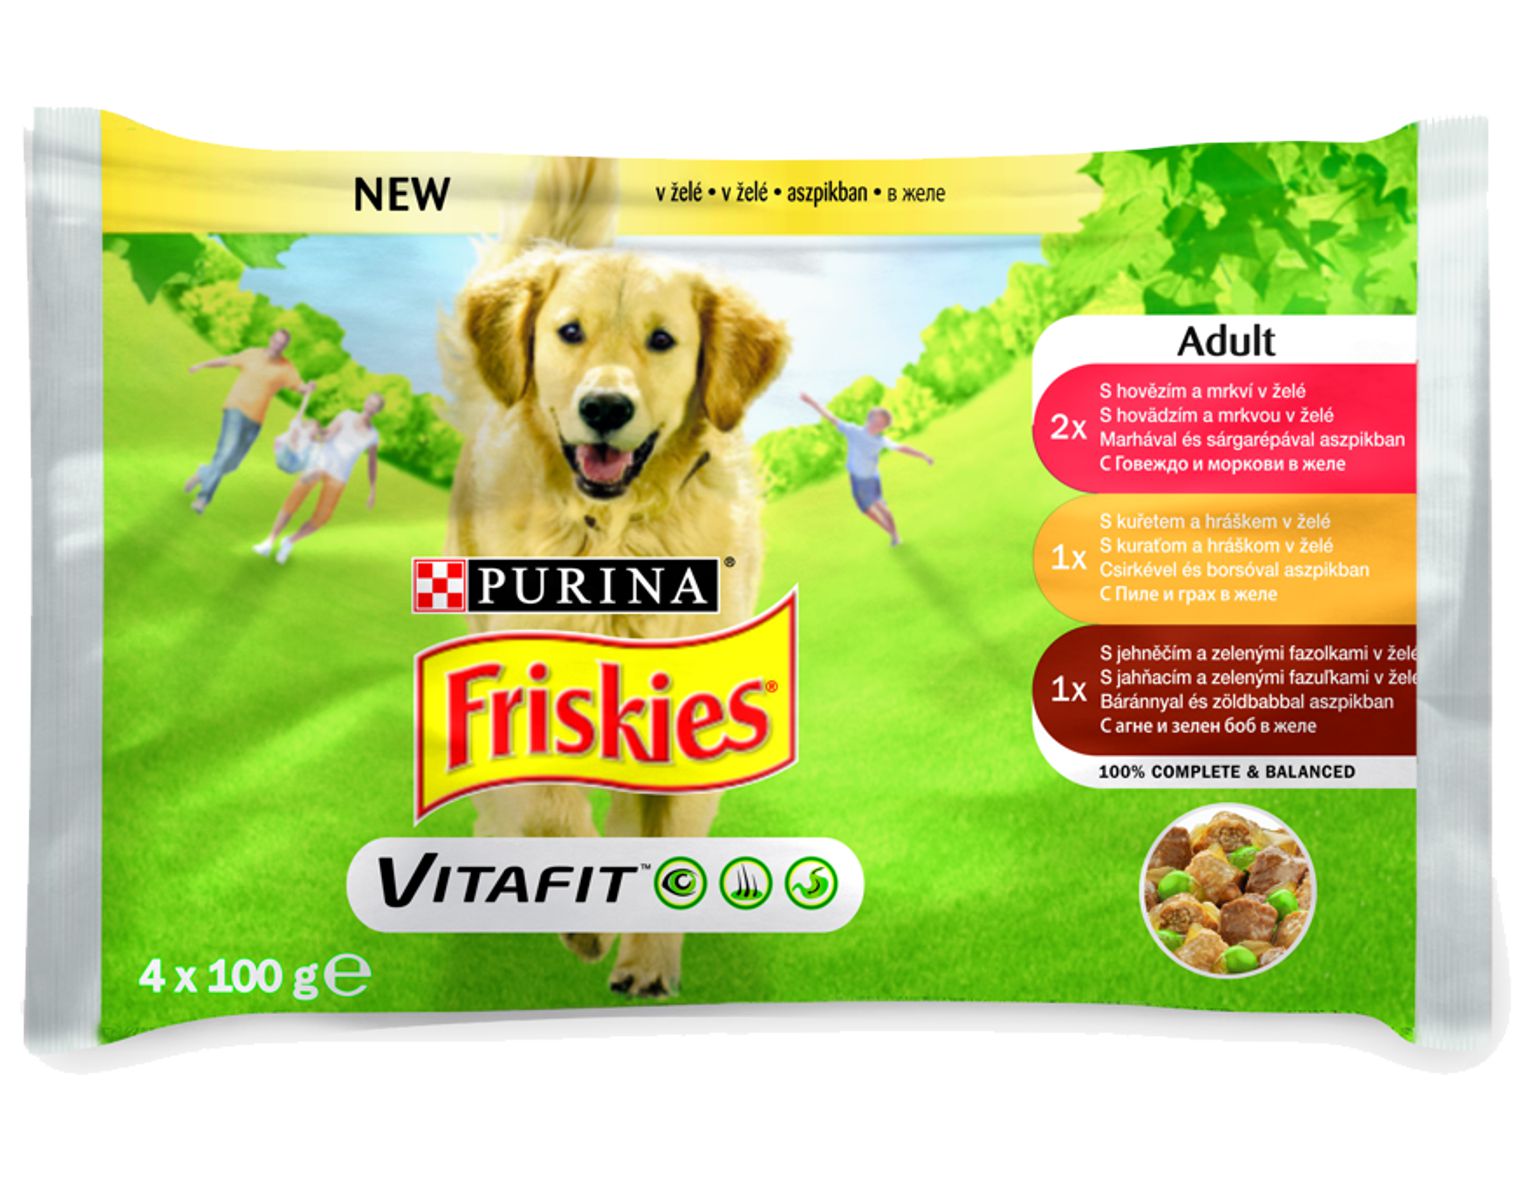 FRISKIES Dog ADULT kapsička hovädzina + mrkva, kura + hrášok, jahňa + zelené fazuľky v želé 4x100g